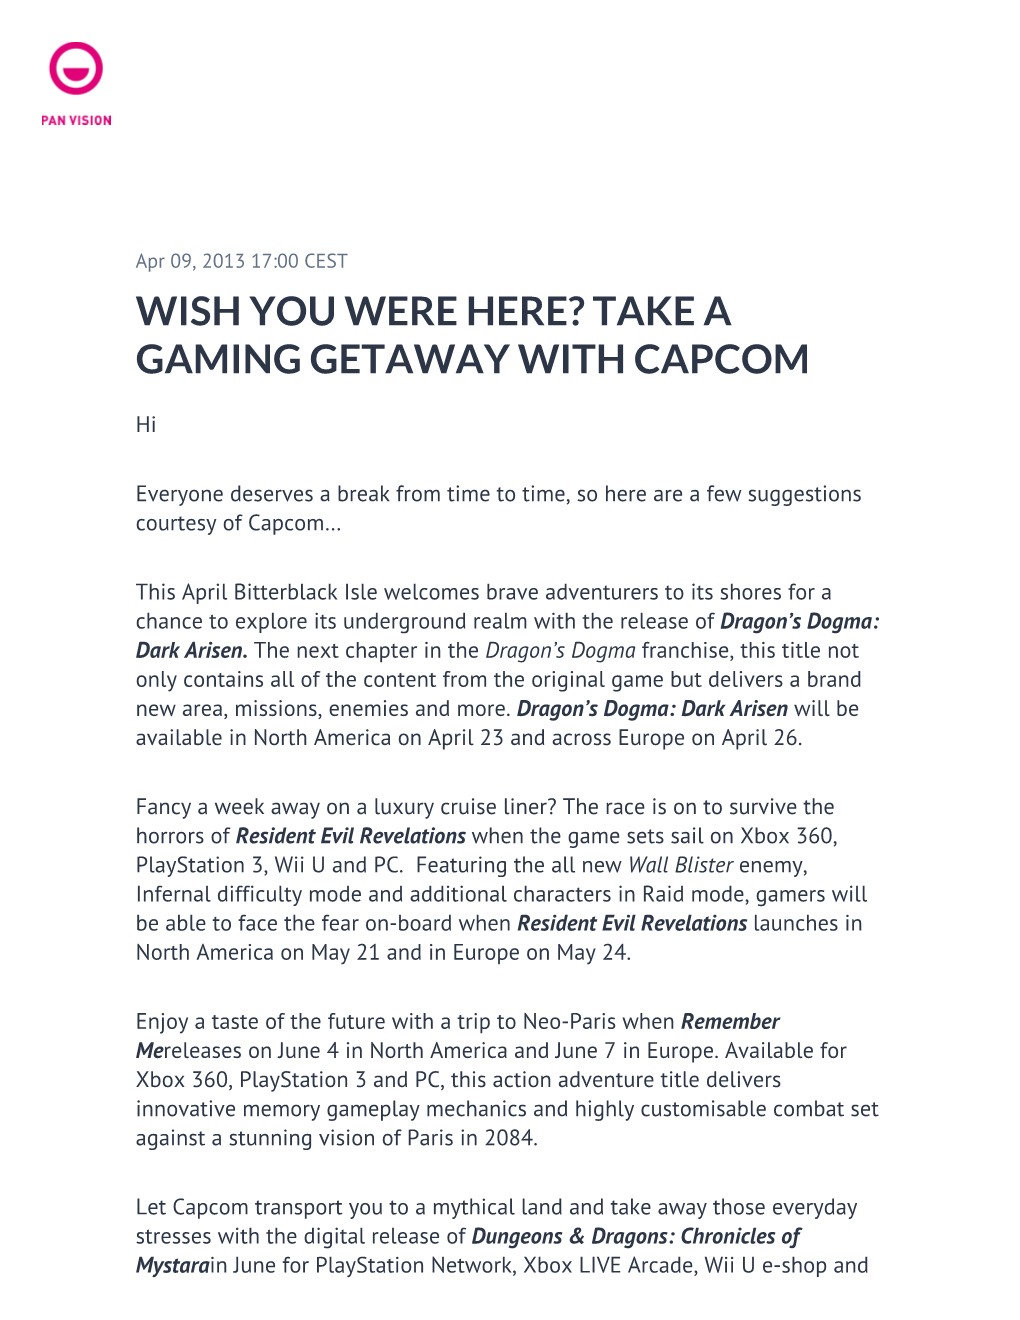 Take a Gaming Getaway with Capcom